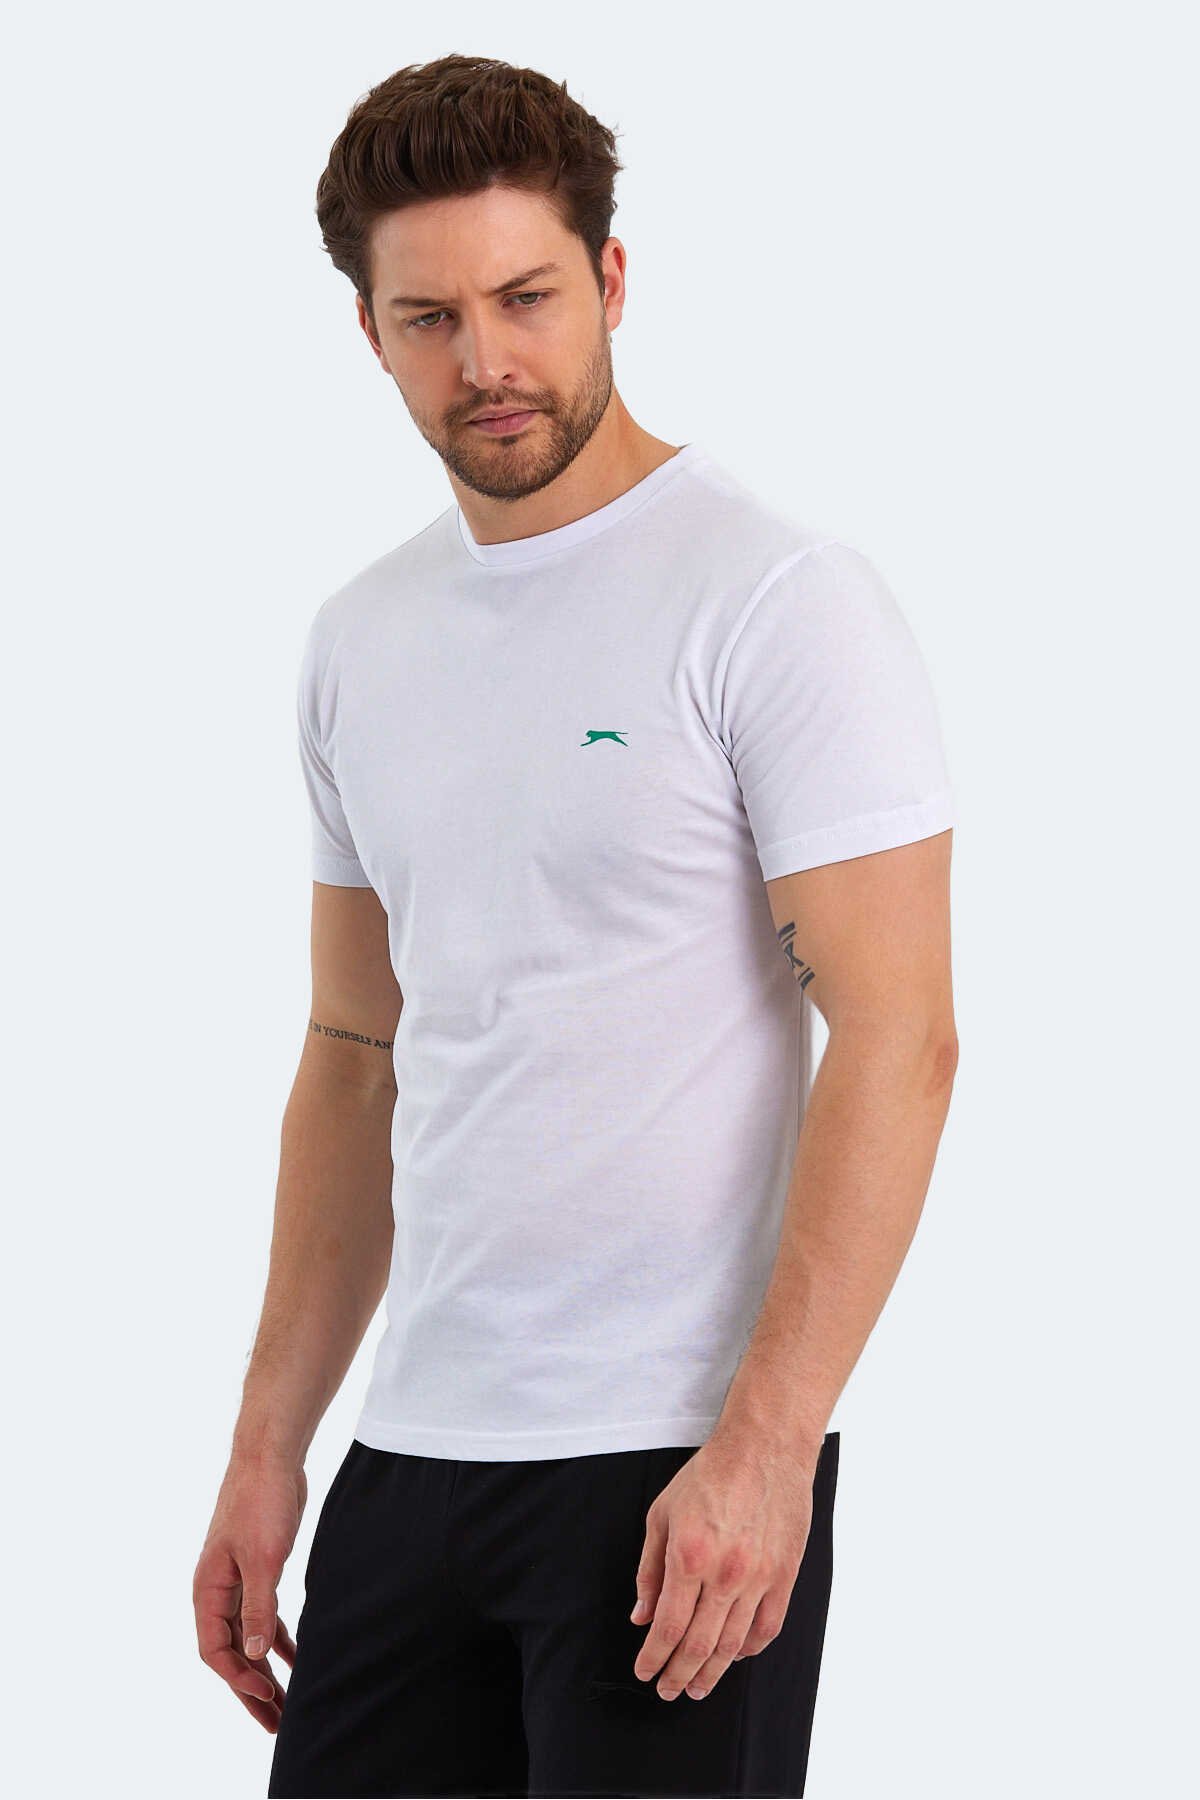 Slazenger POLL Erkek Kısa Kol T-Shirt Beyaz